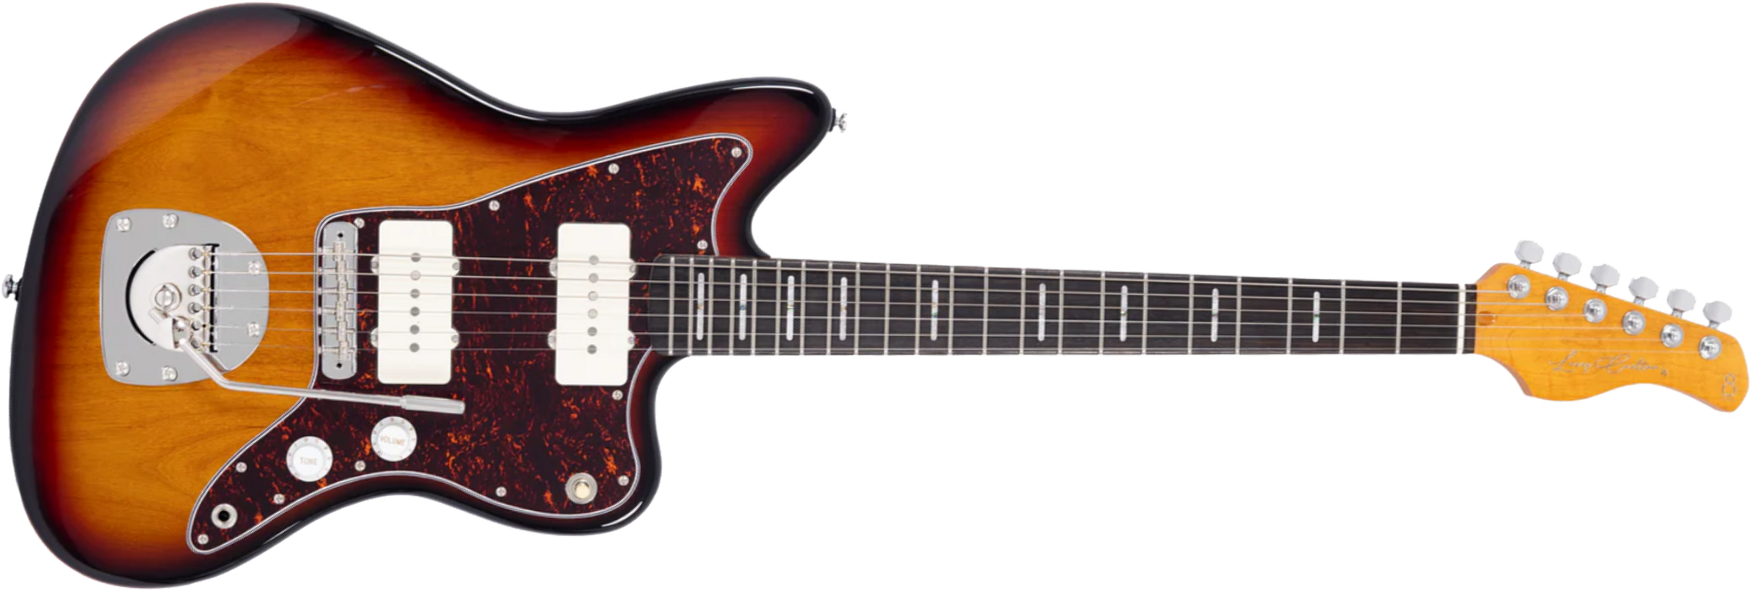 Sire Larry Carlton J5 2s Trem Eb - 3-tone Sunburst - Retro-rock elektrische gitaar - Main picture